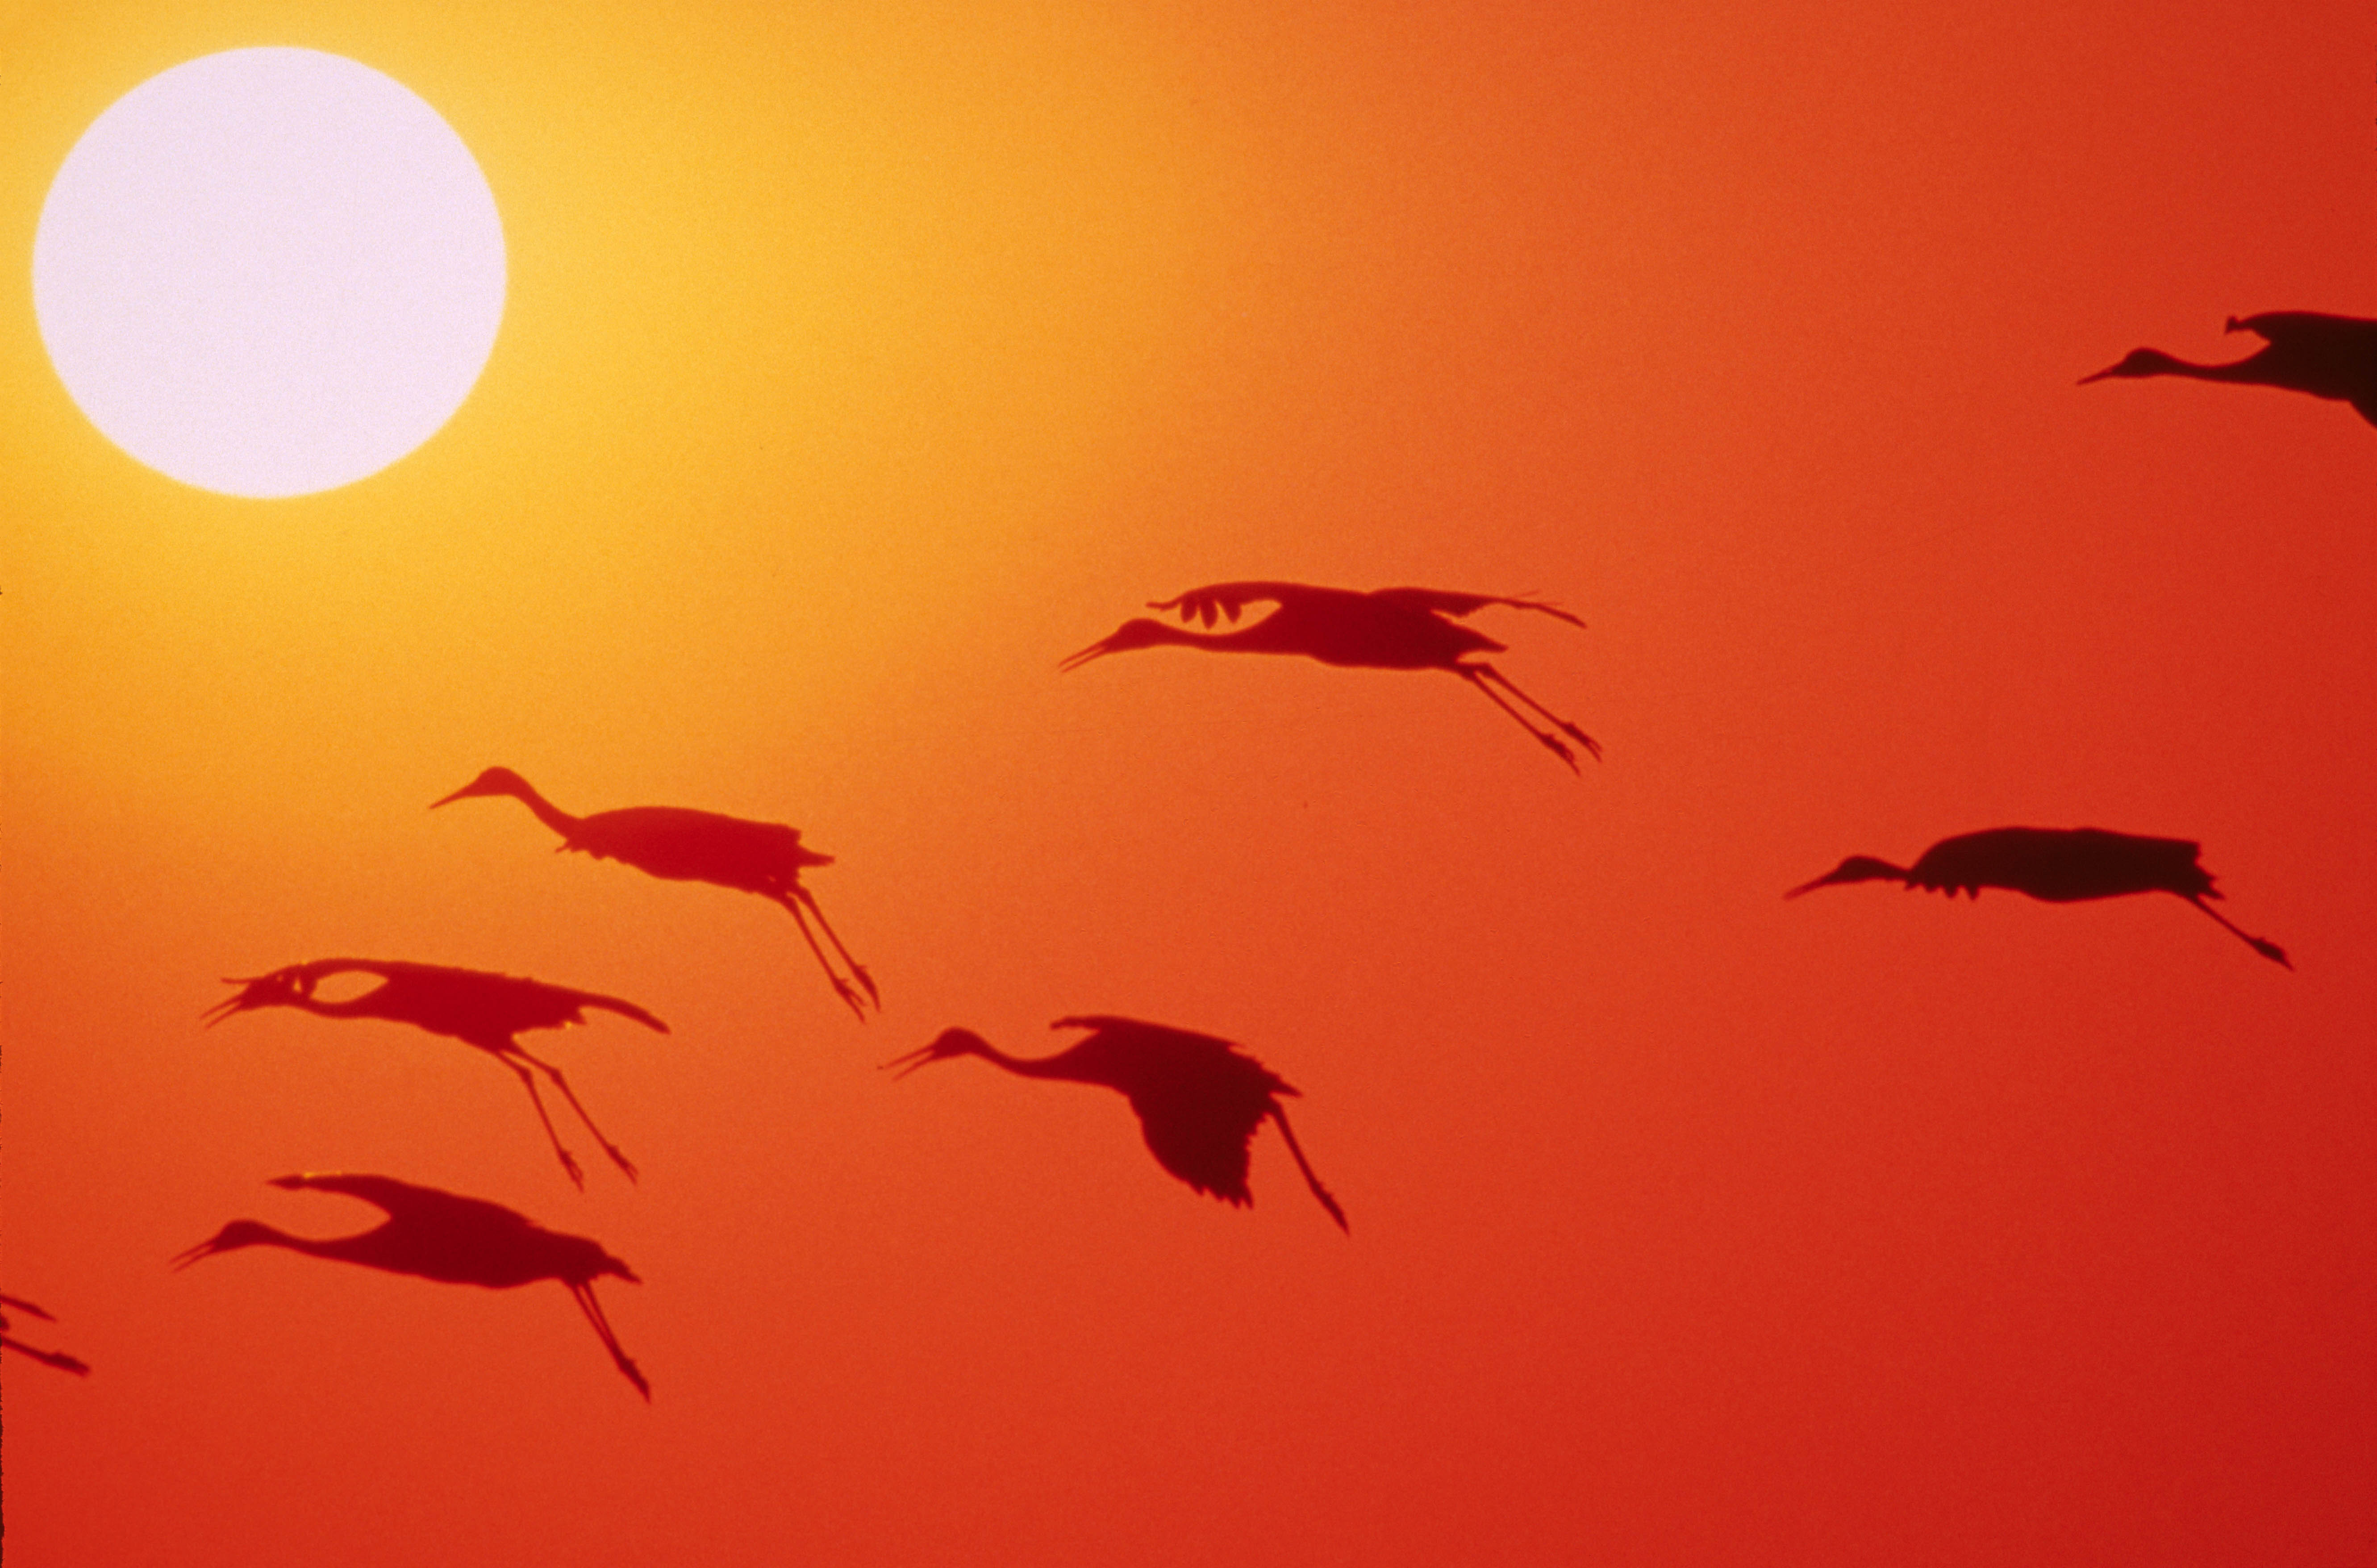 cranes-flying-over-the-setting-sun.jpg